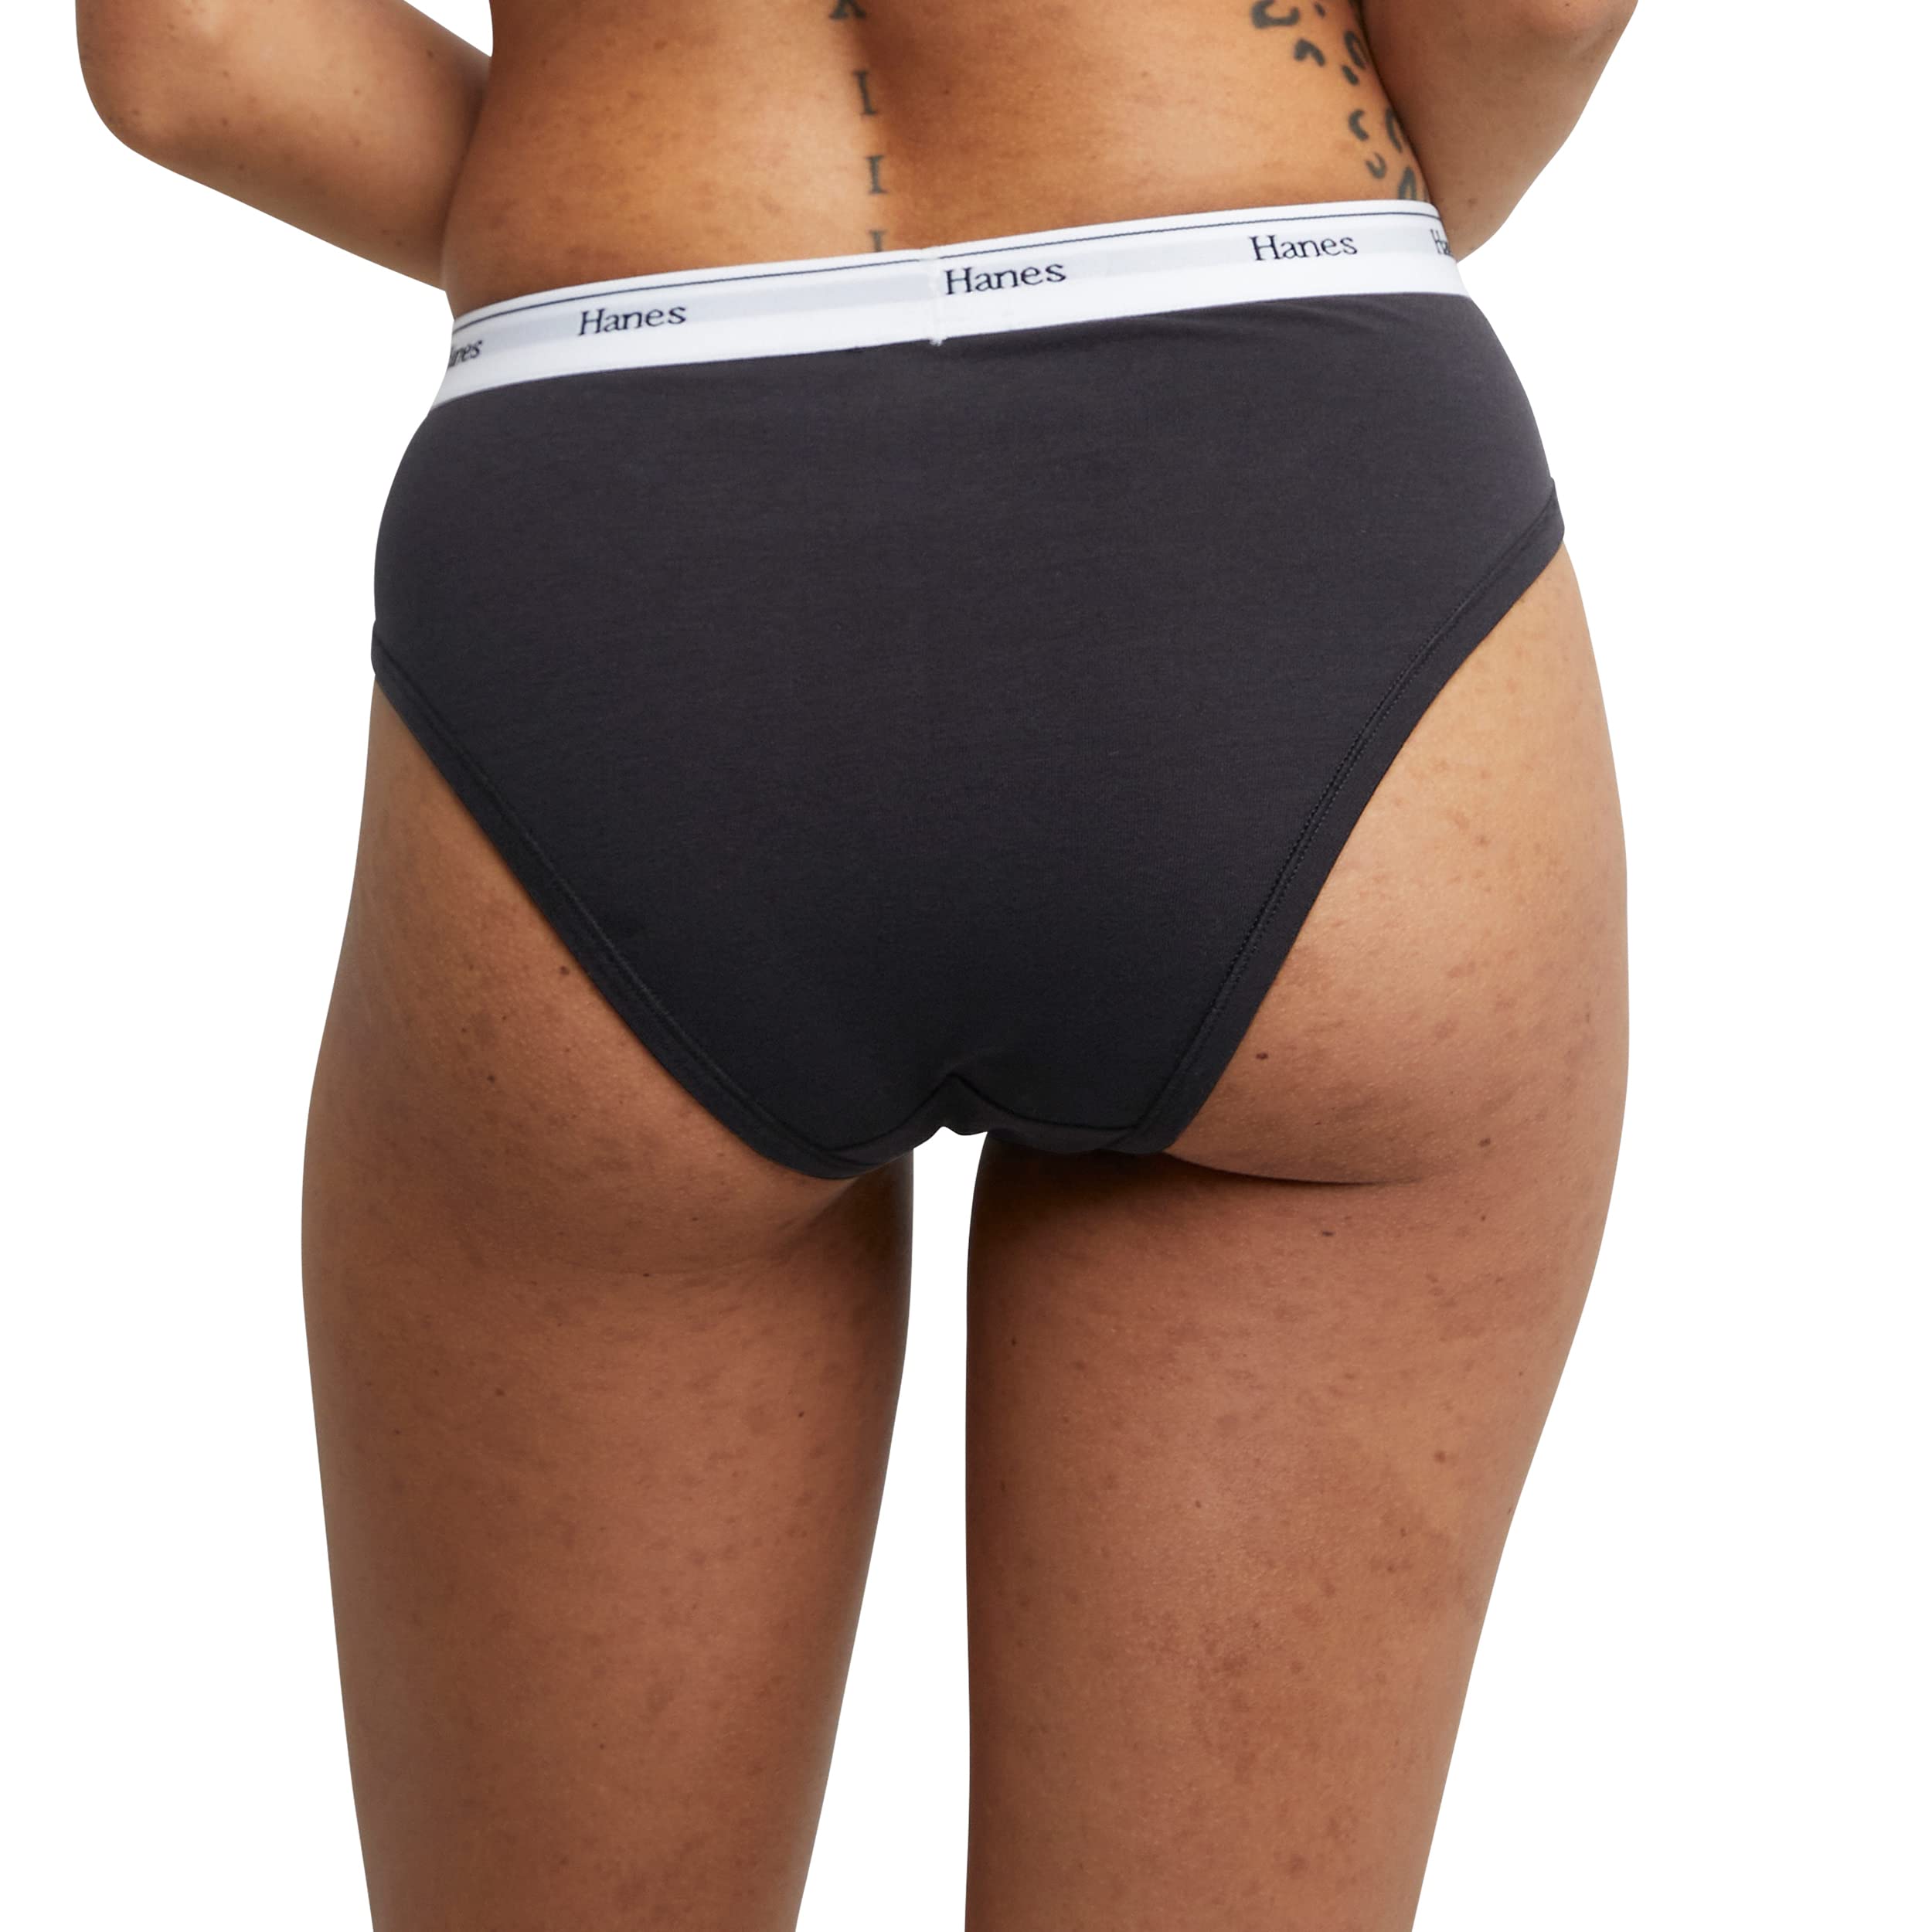 Hanes Women's Originals Panties Pack, Breathable Cotton Stretch Underwear, Basic Color Mix, 6-Pack Hi-Cuts, Large